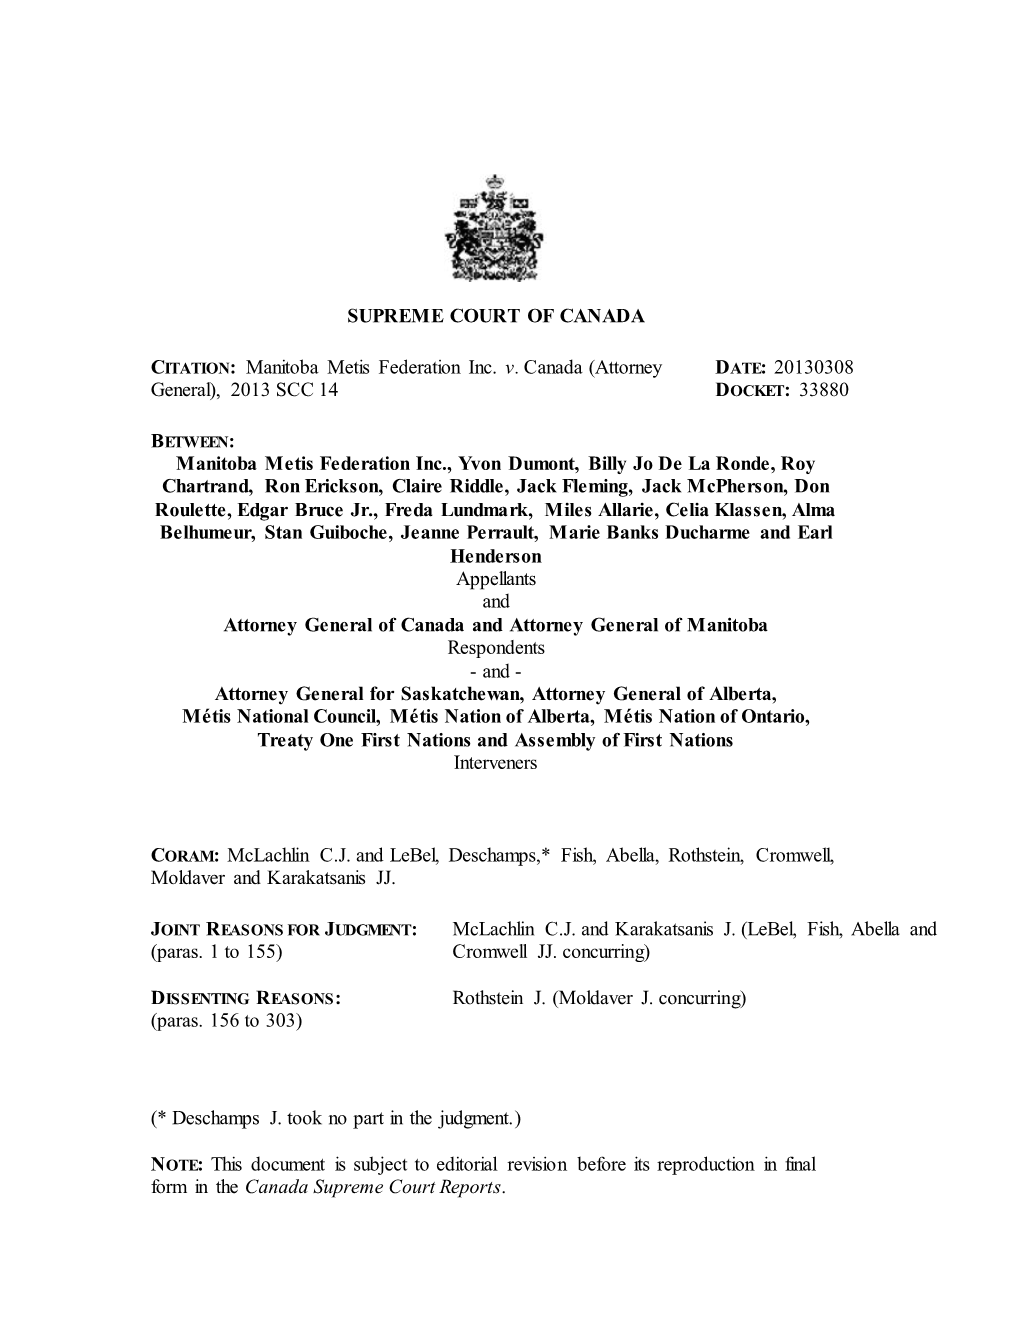 Manitoba Metis Federation Inc. V. Canada (Attorney General)